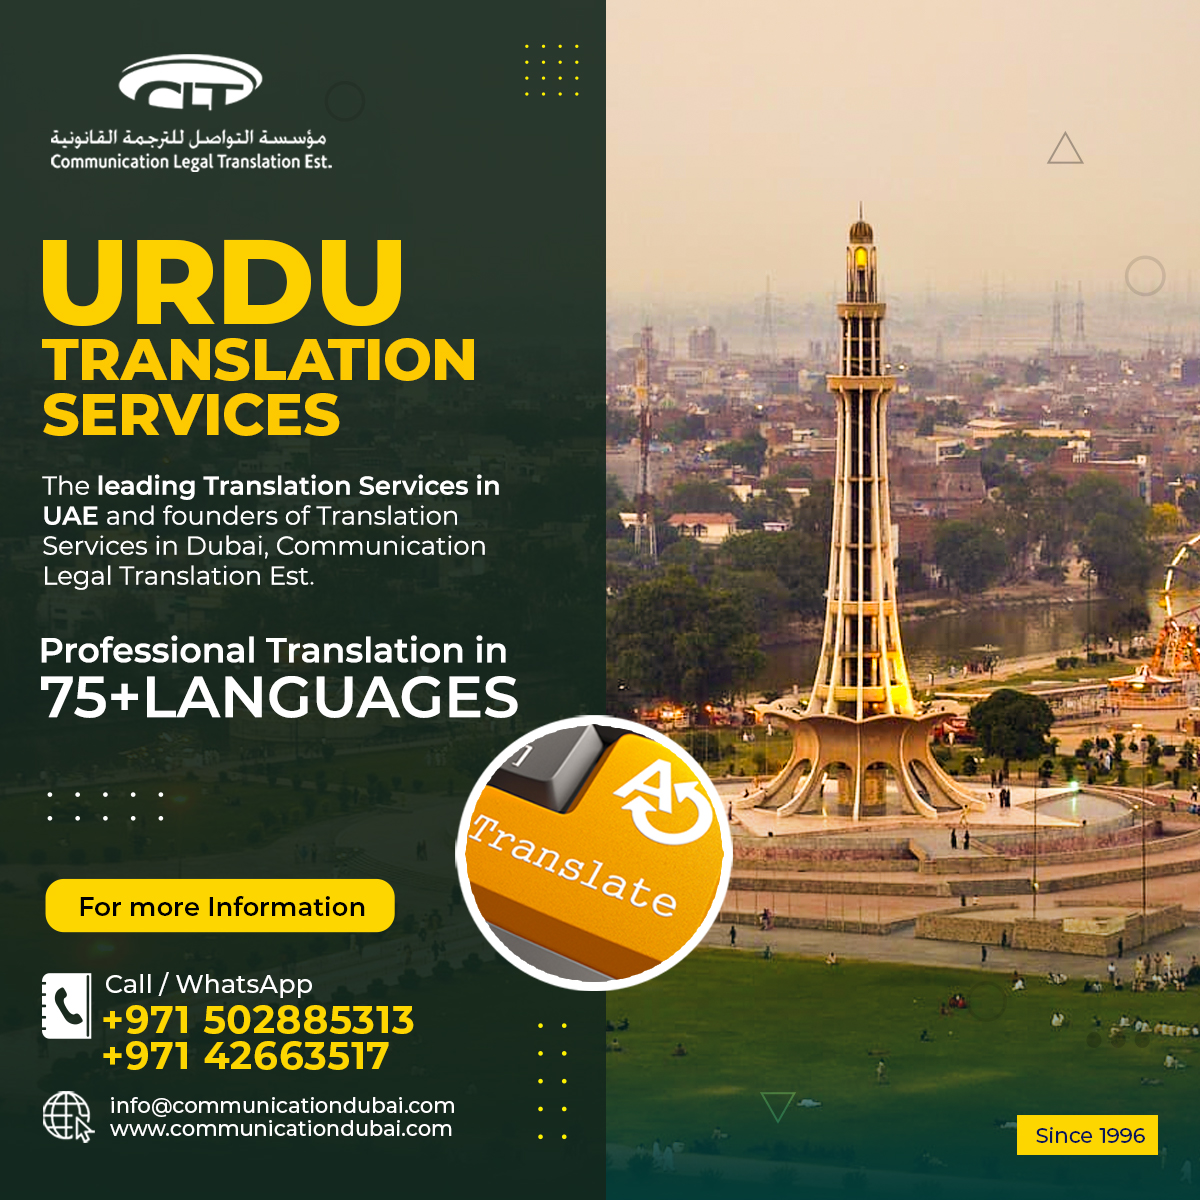 For More Information Please Visit Our Website
bit.ly/2ZKWz4U
Phone: +971 42663517

#UrduTranslation
#اردو_ترجمہ 
#UrduTranslator
#اردو_ترجمہ_سروs
#ProfessionalTranslation
#اردو_زبان #DocumentTranslation